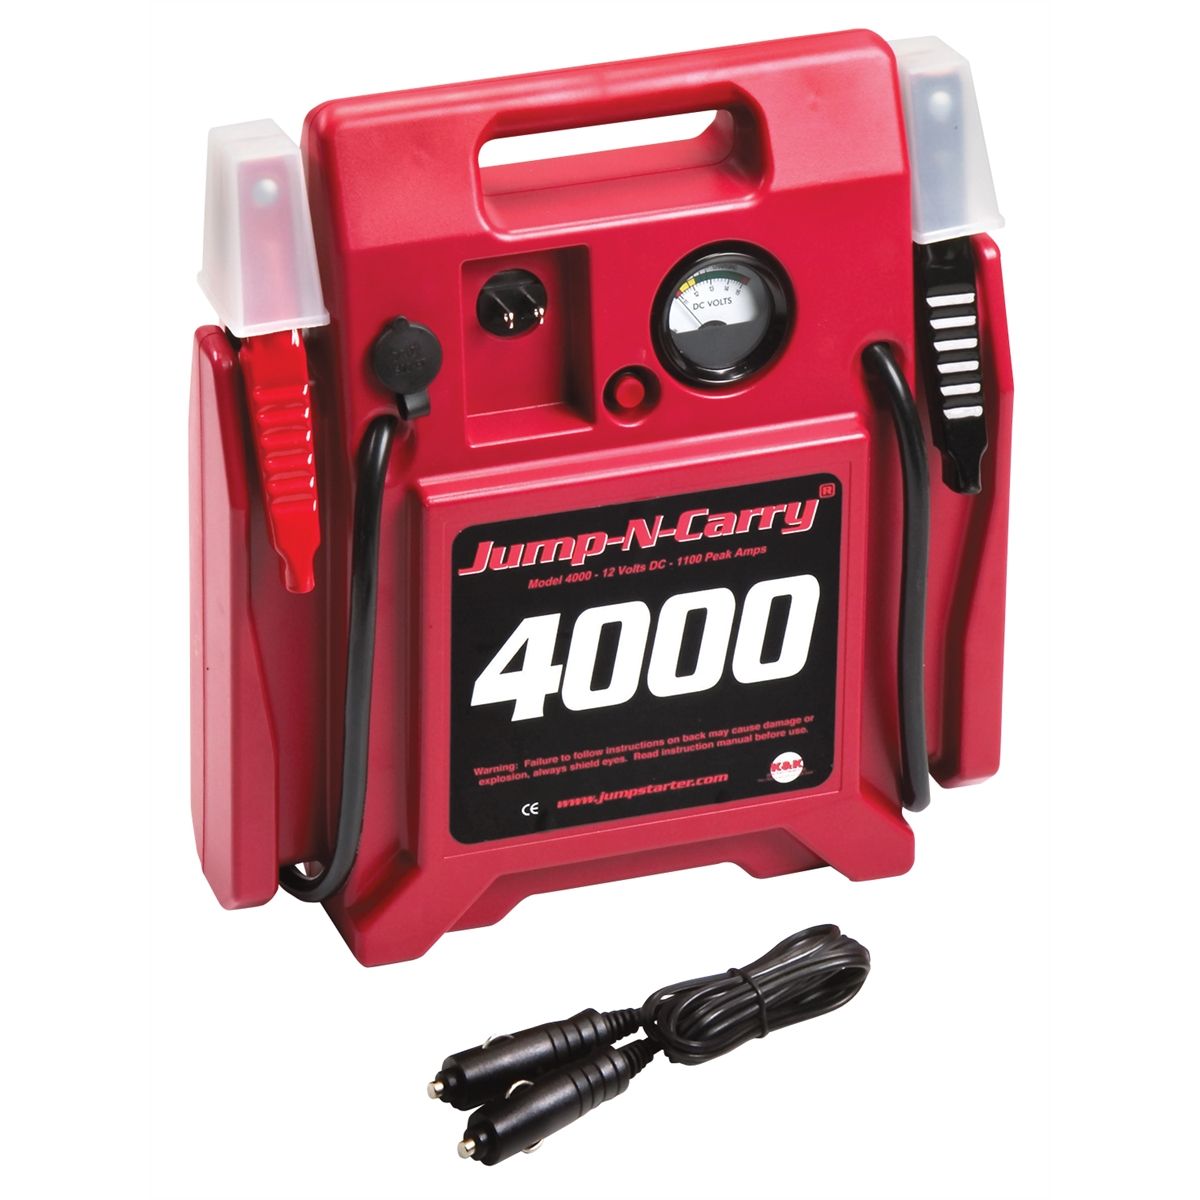 Get gk jmpstr 0002 multifunktions powerbank mini jump starter 360 amp